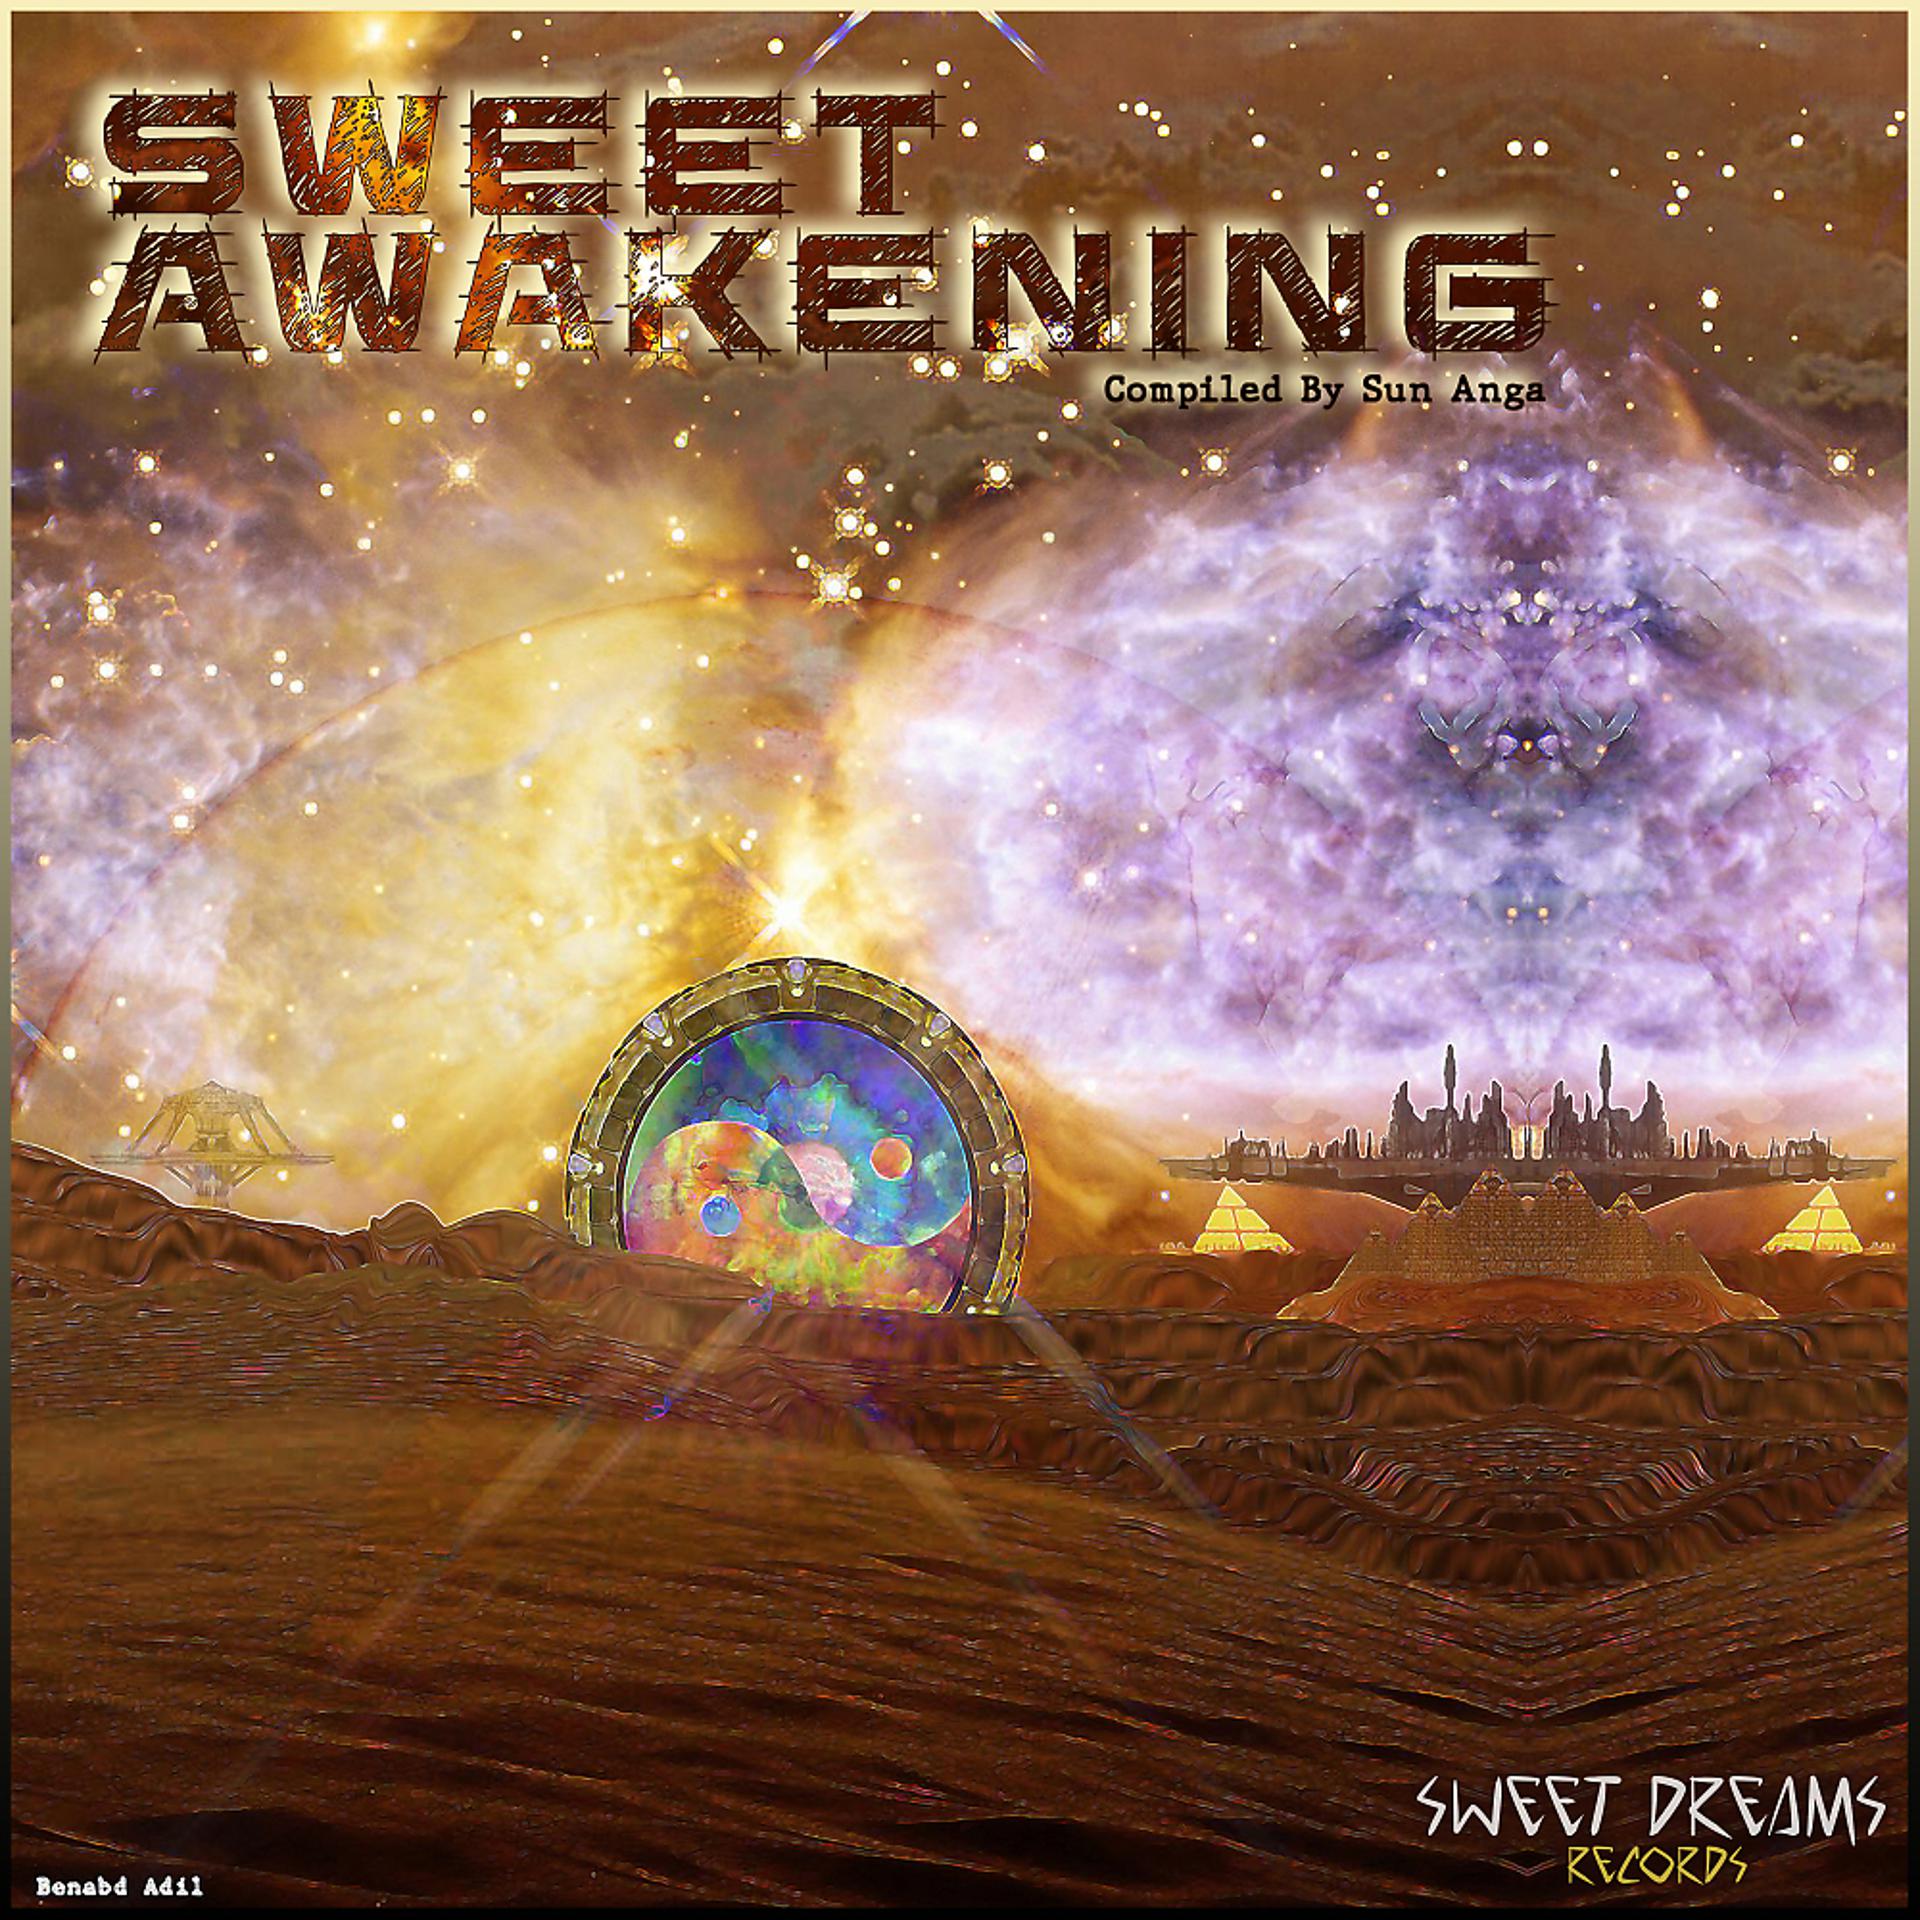 Постер альбома Sweet Awakening